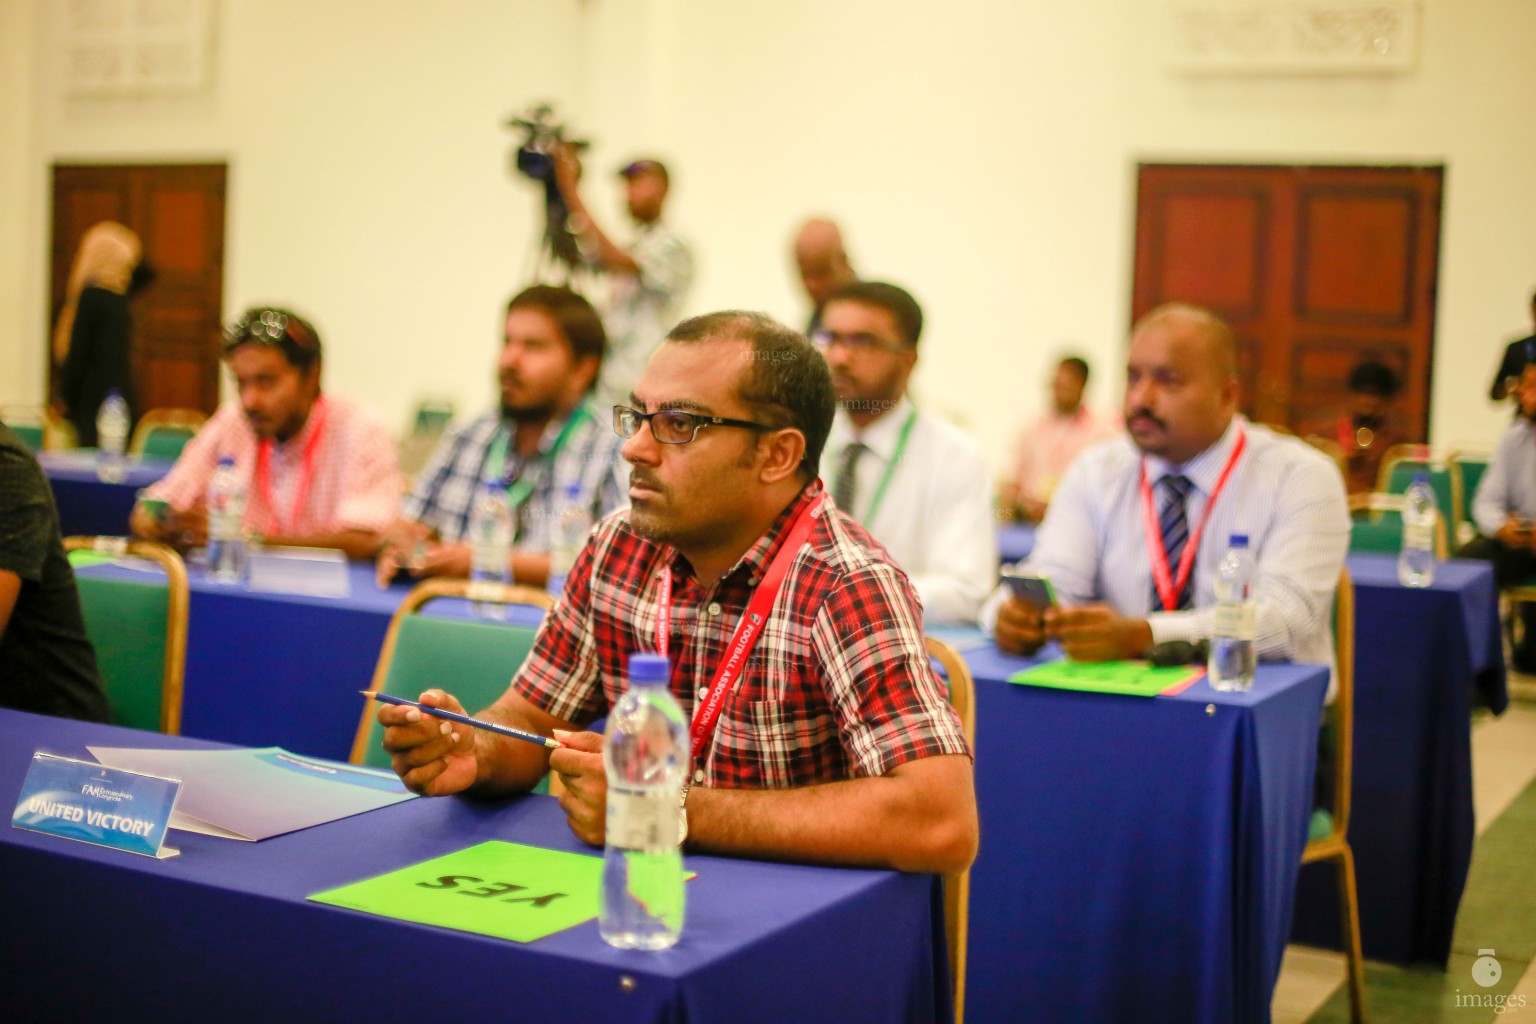 Football Association of Maldives, extra ordinary congress in Male', Maldives, Saturday, May. 07, 2016.(Images.mv Photo/ Hussain Sinan).